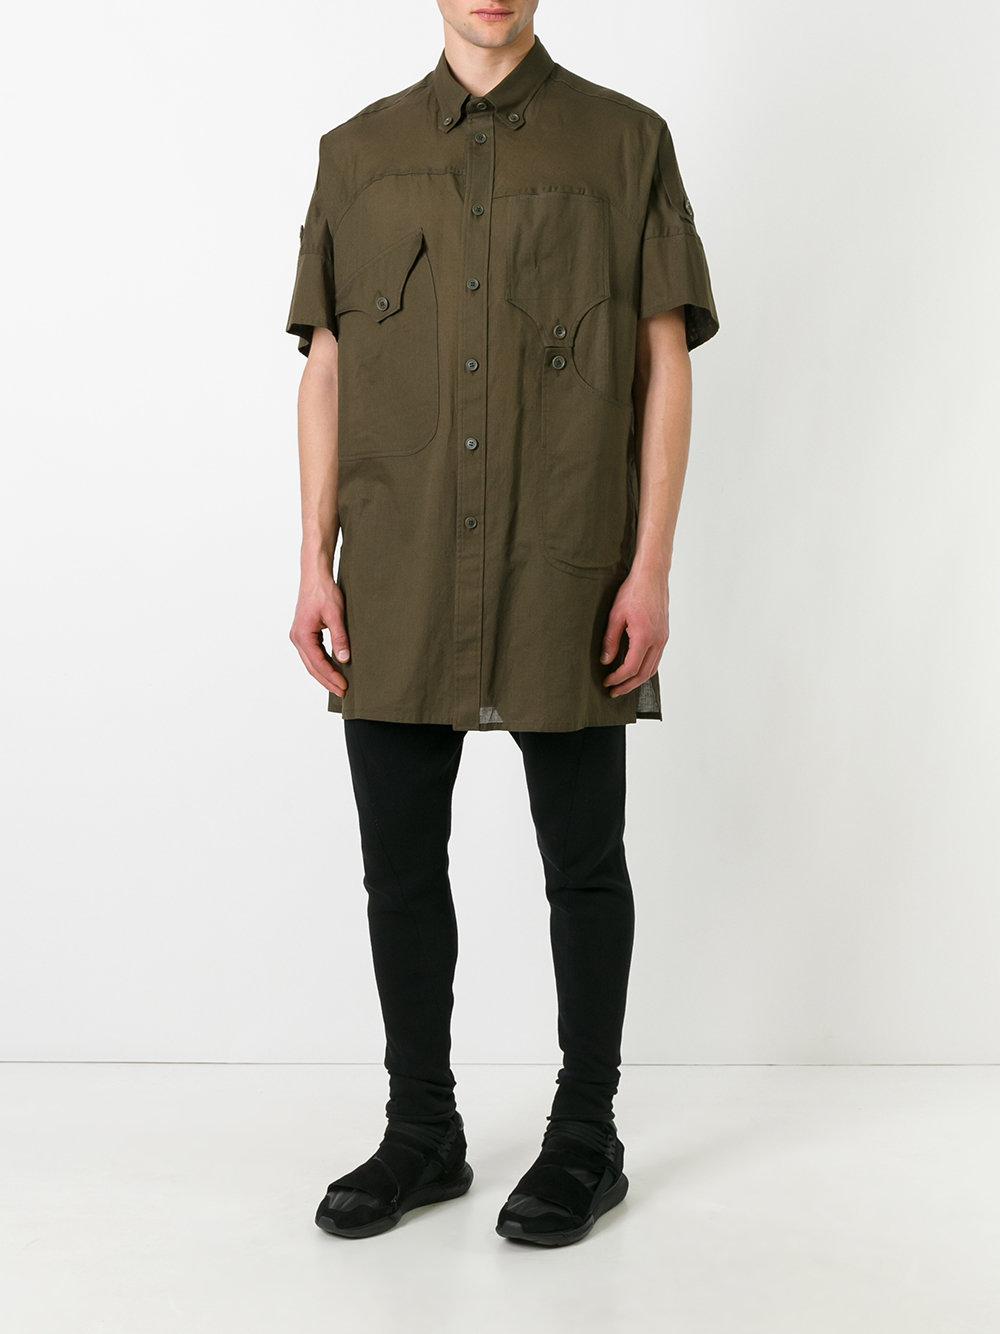 Lyst - Yohji Yamamoto Asymmetric Pocket Shirt in Green for Men